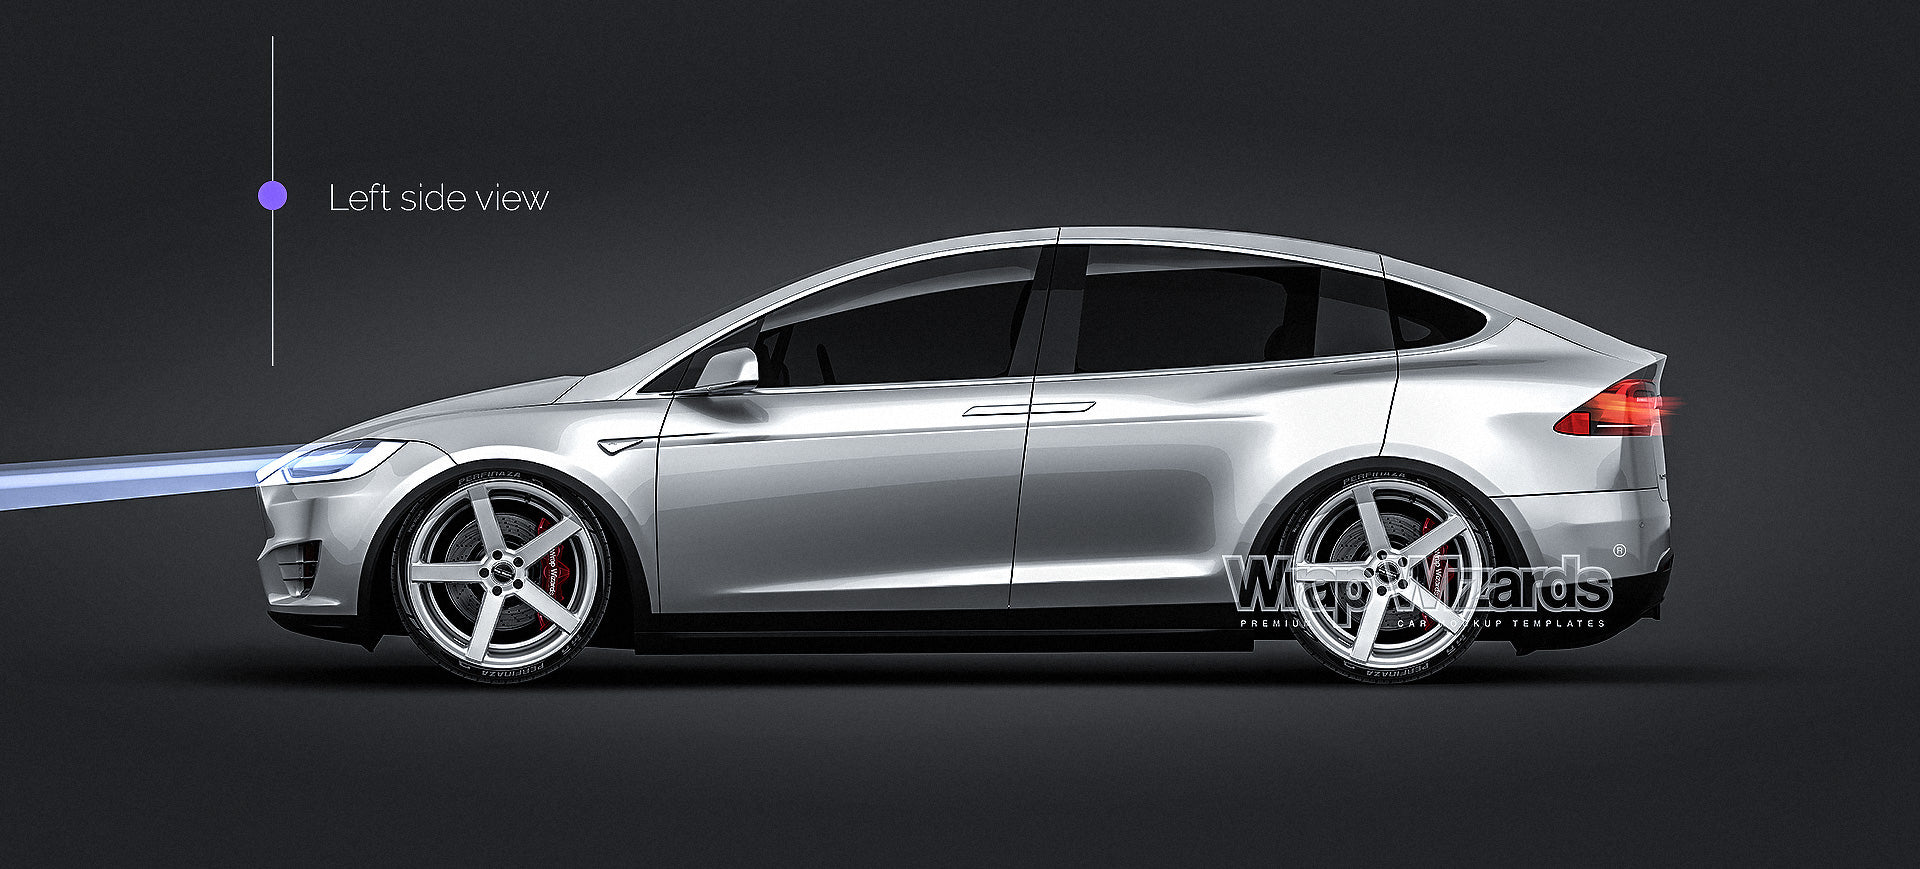 Tesla Model X 2017 glossy finish - all sides Car Mockup Template.psd